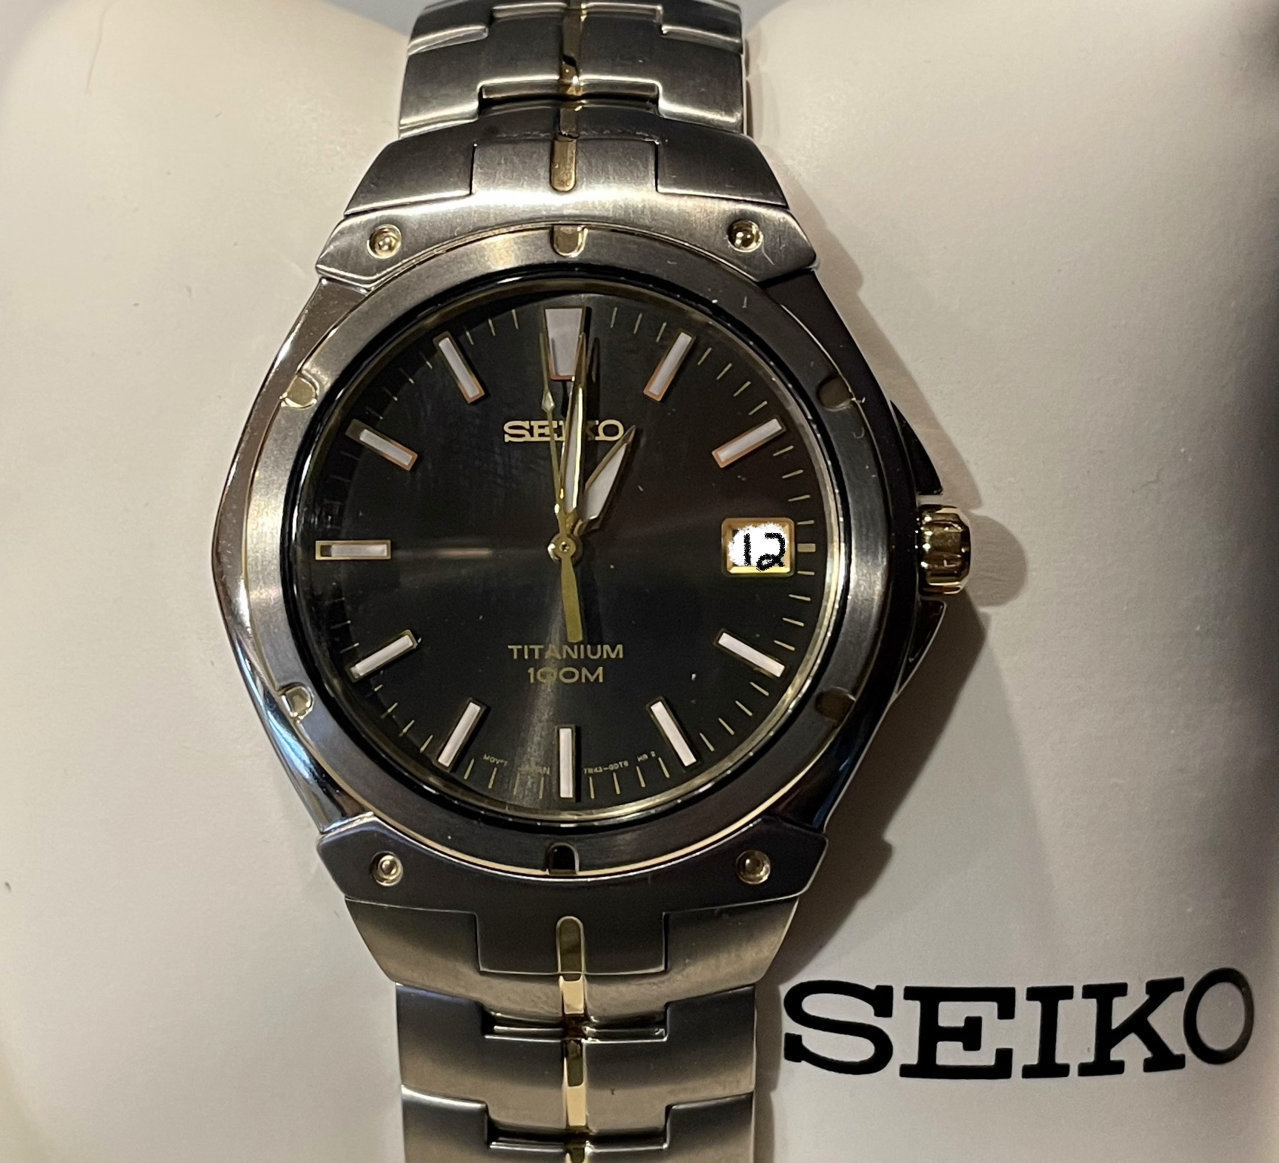 Seiko Titanium 100 Watch For Sale. | Page 5 | Tacoma World